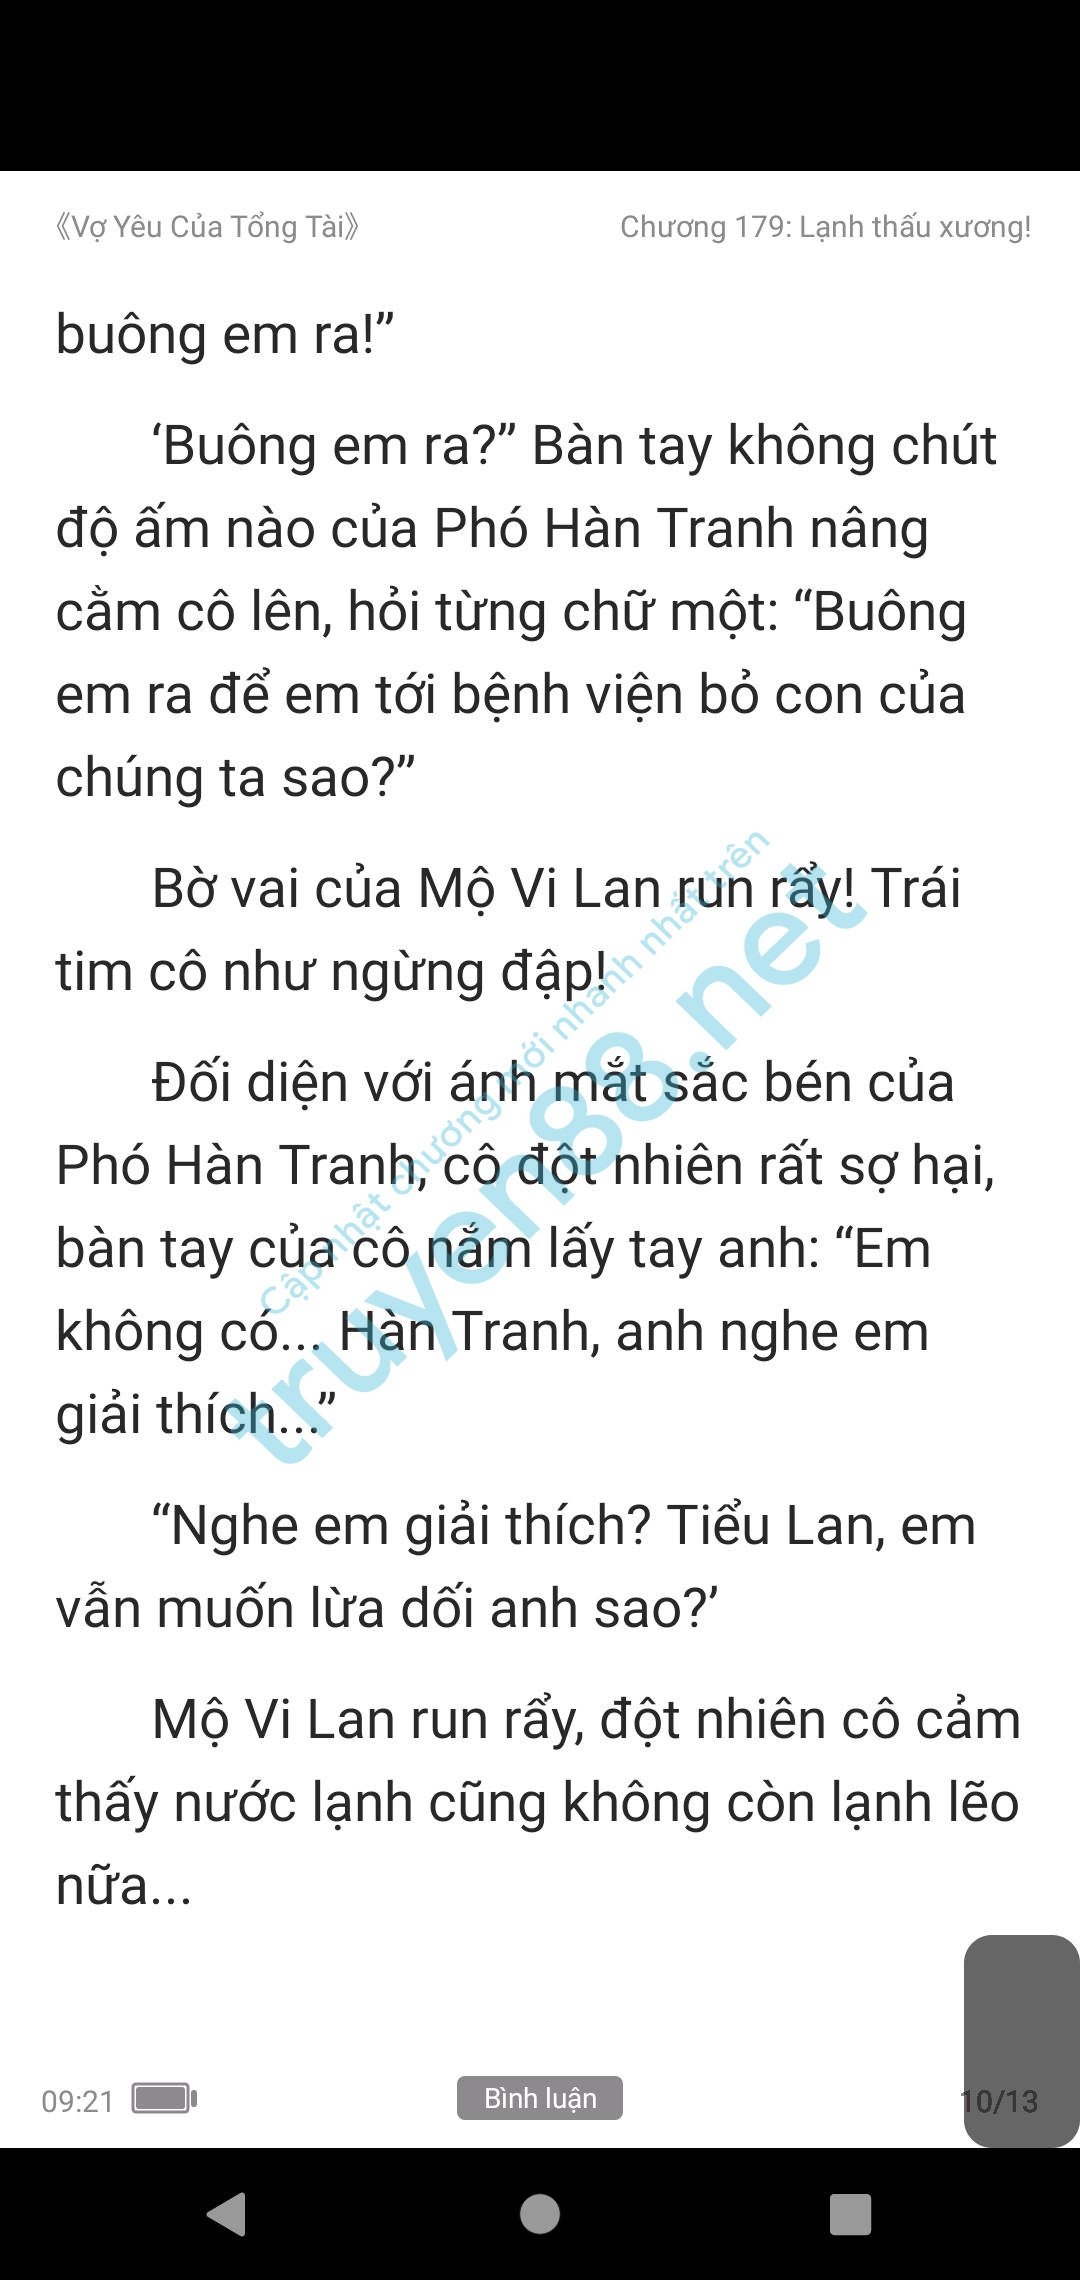 vo-yeu-cua-tong-tai-mo-vi-lan--pho-han-tranh-179-0